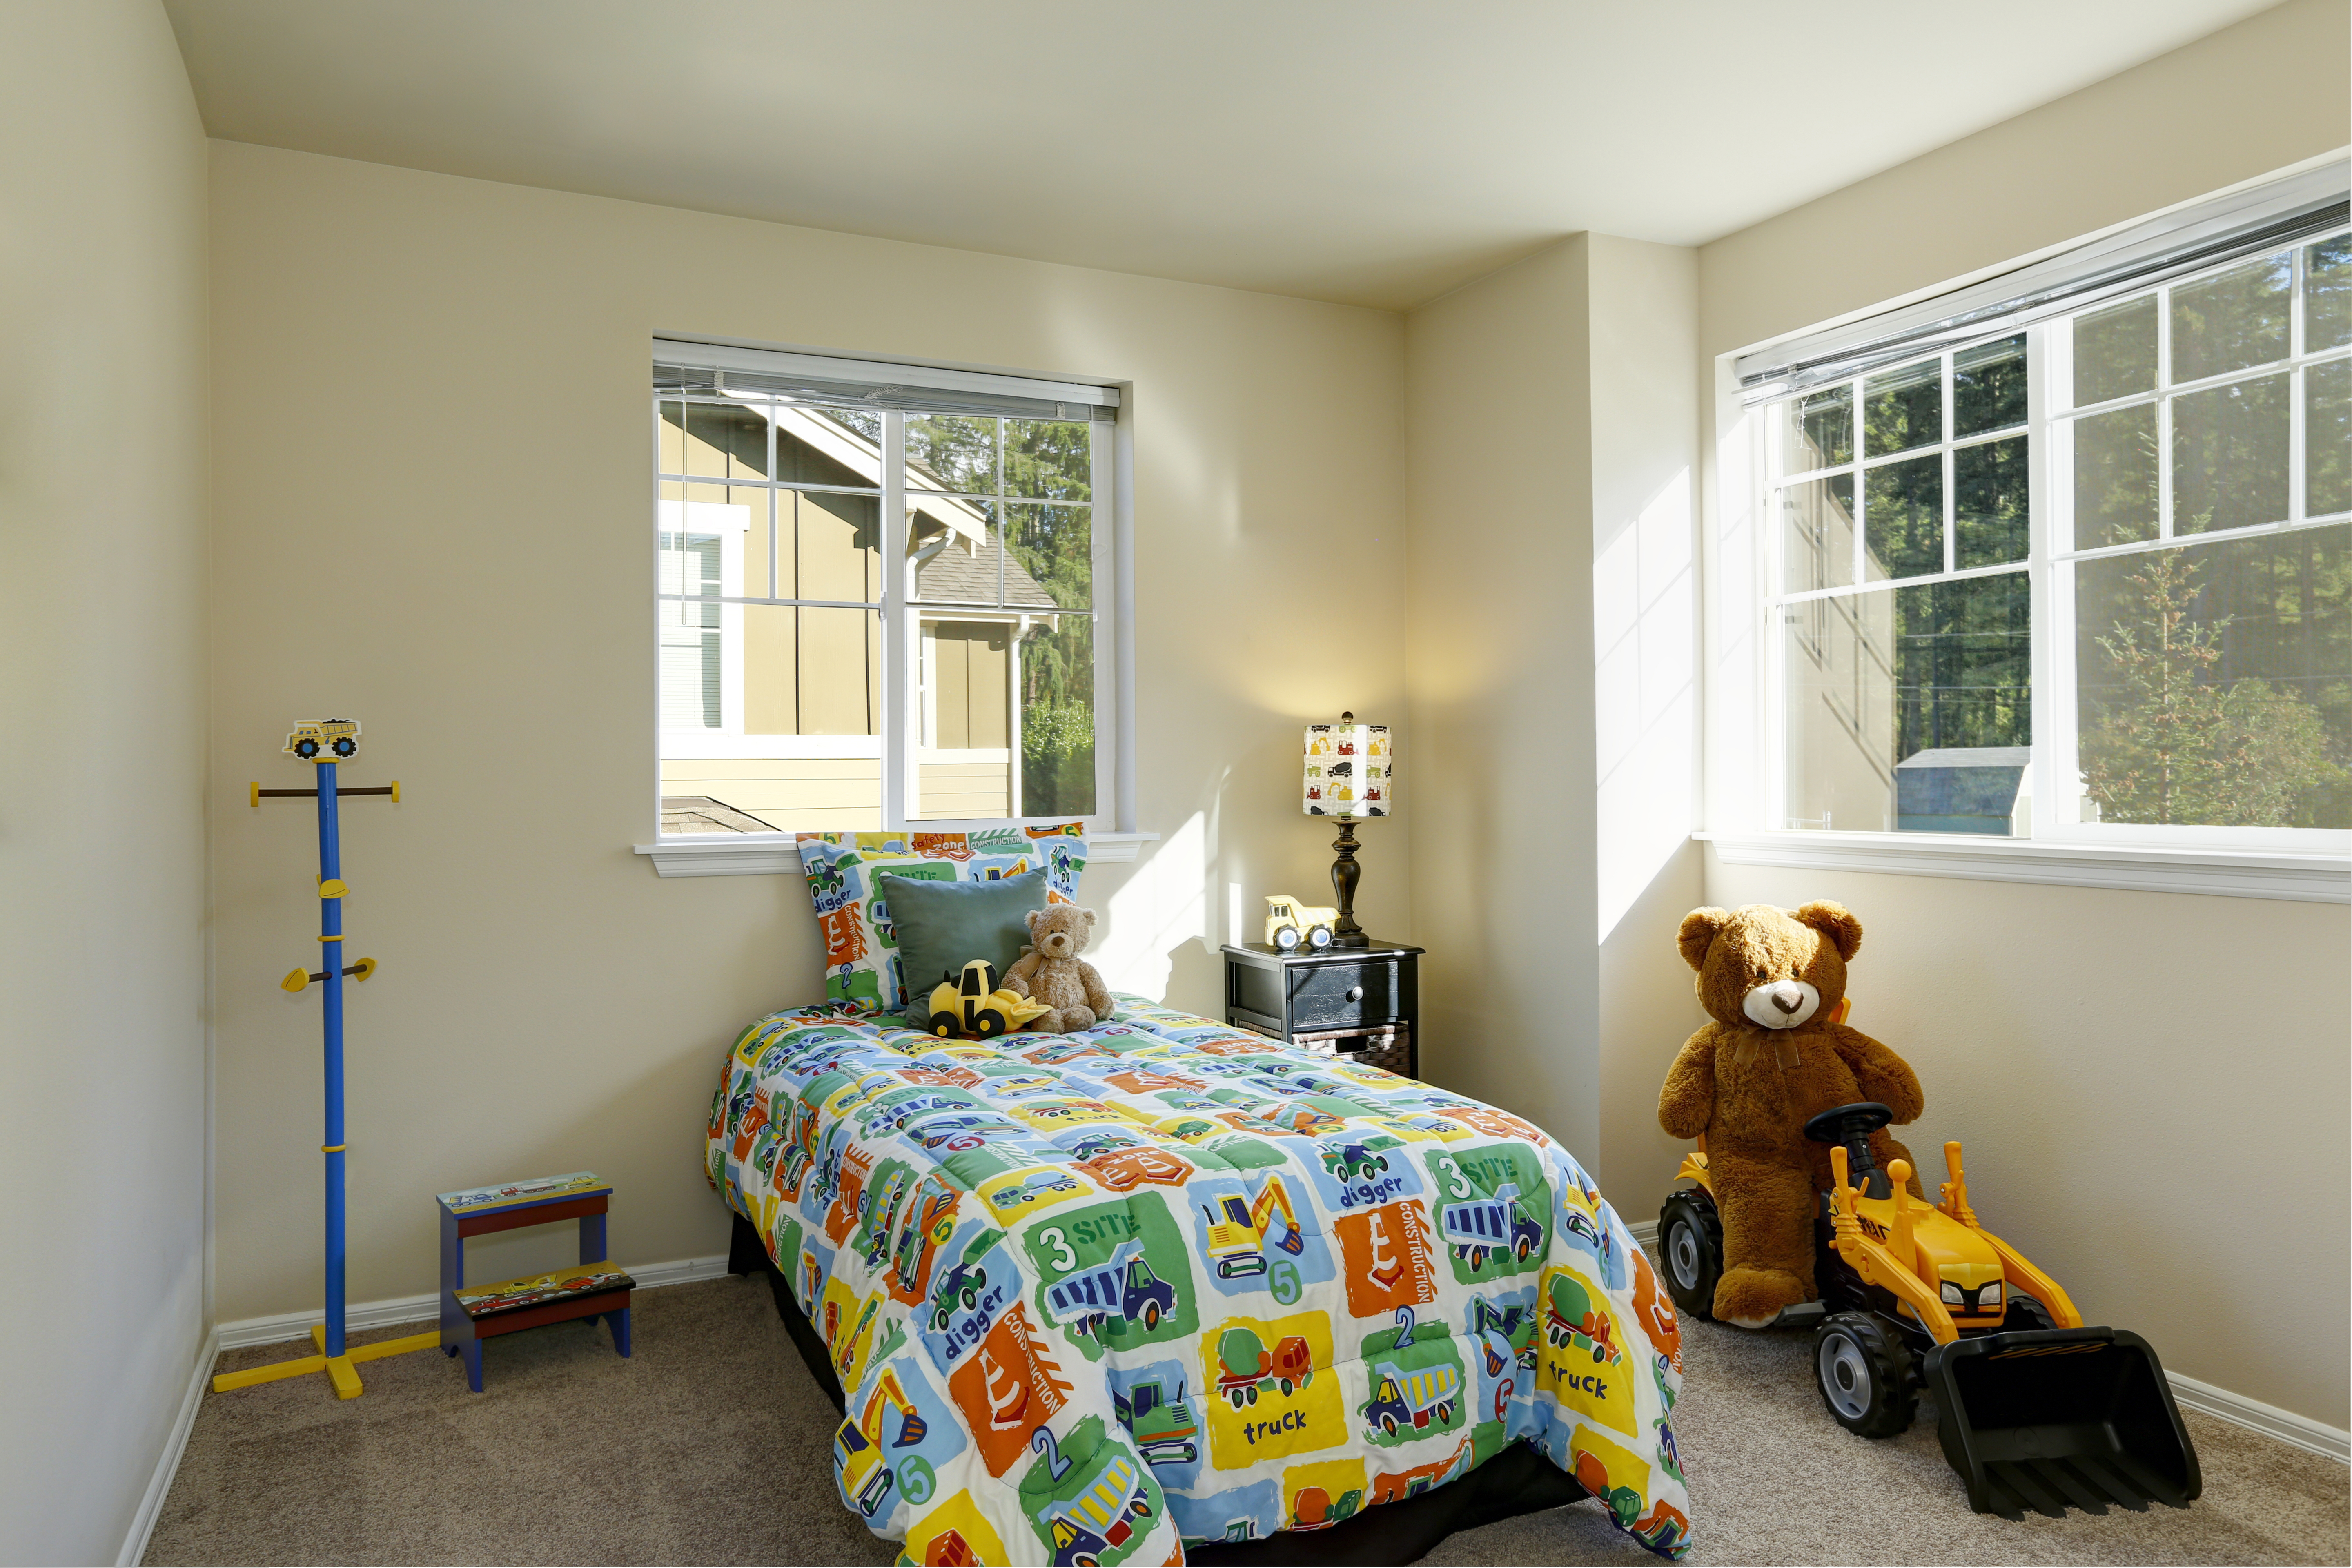 A clean kid's room | Source: Shutterstock